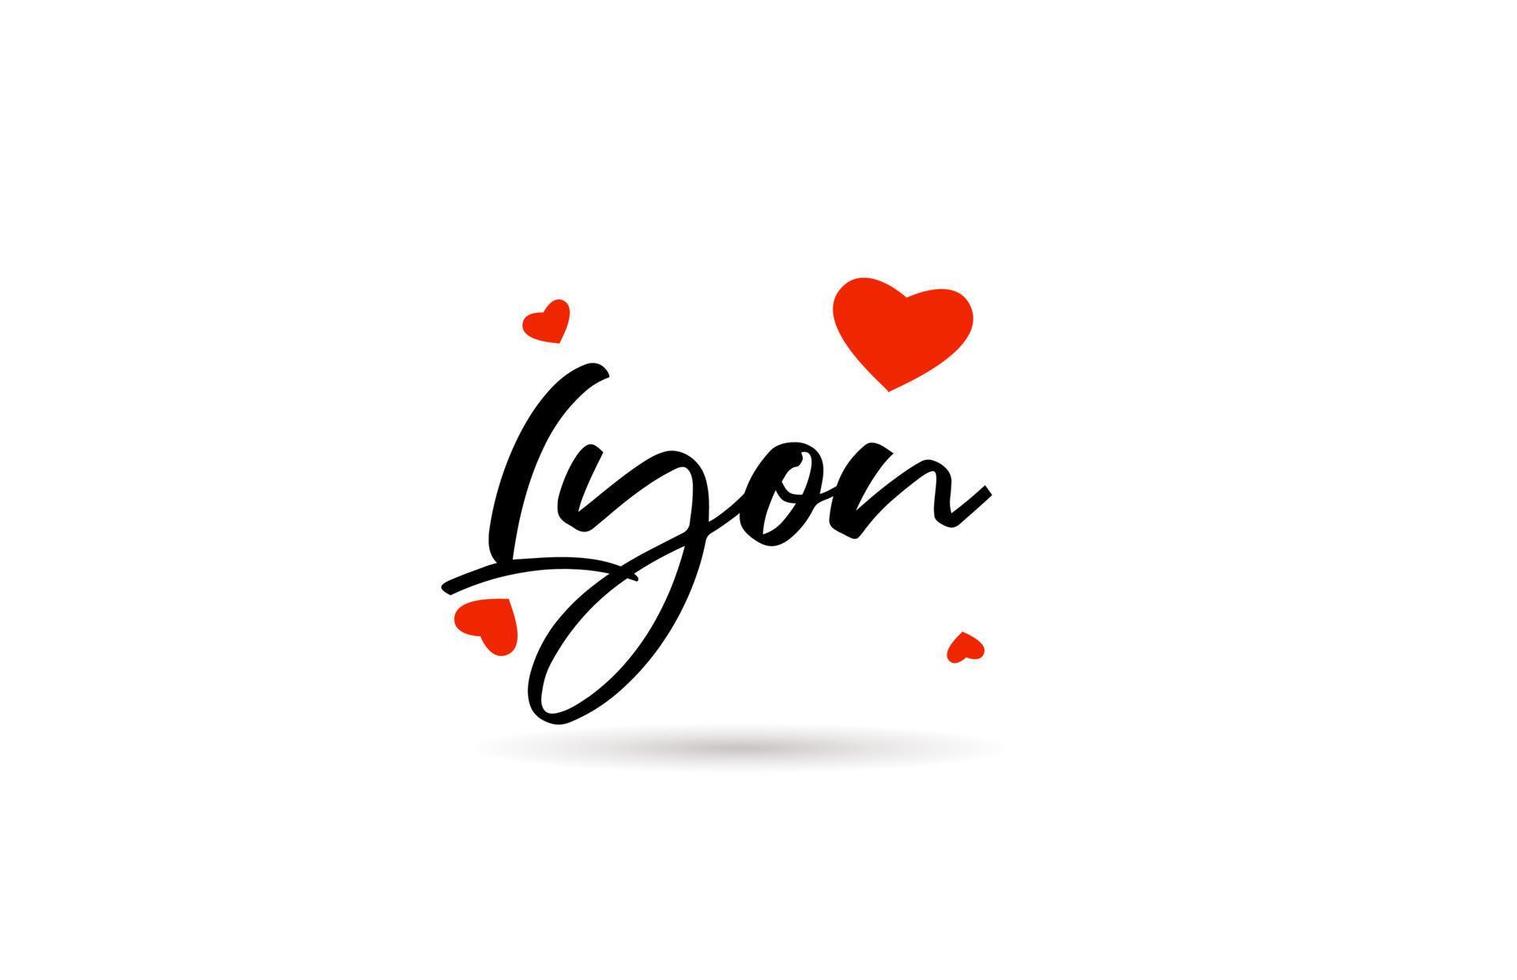 Lyon handwritten city typography text with love heart vector